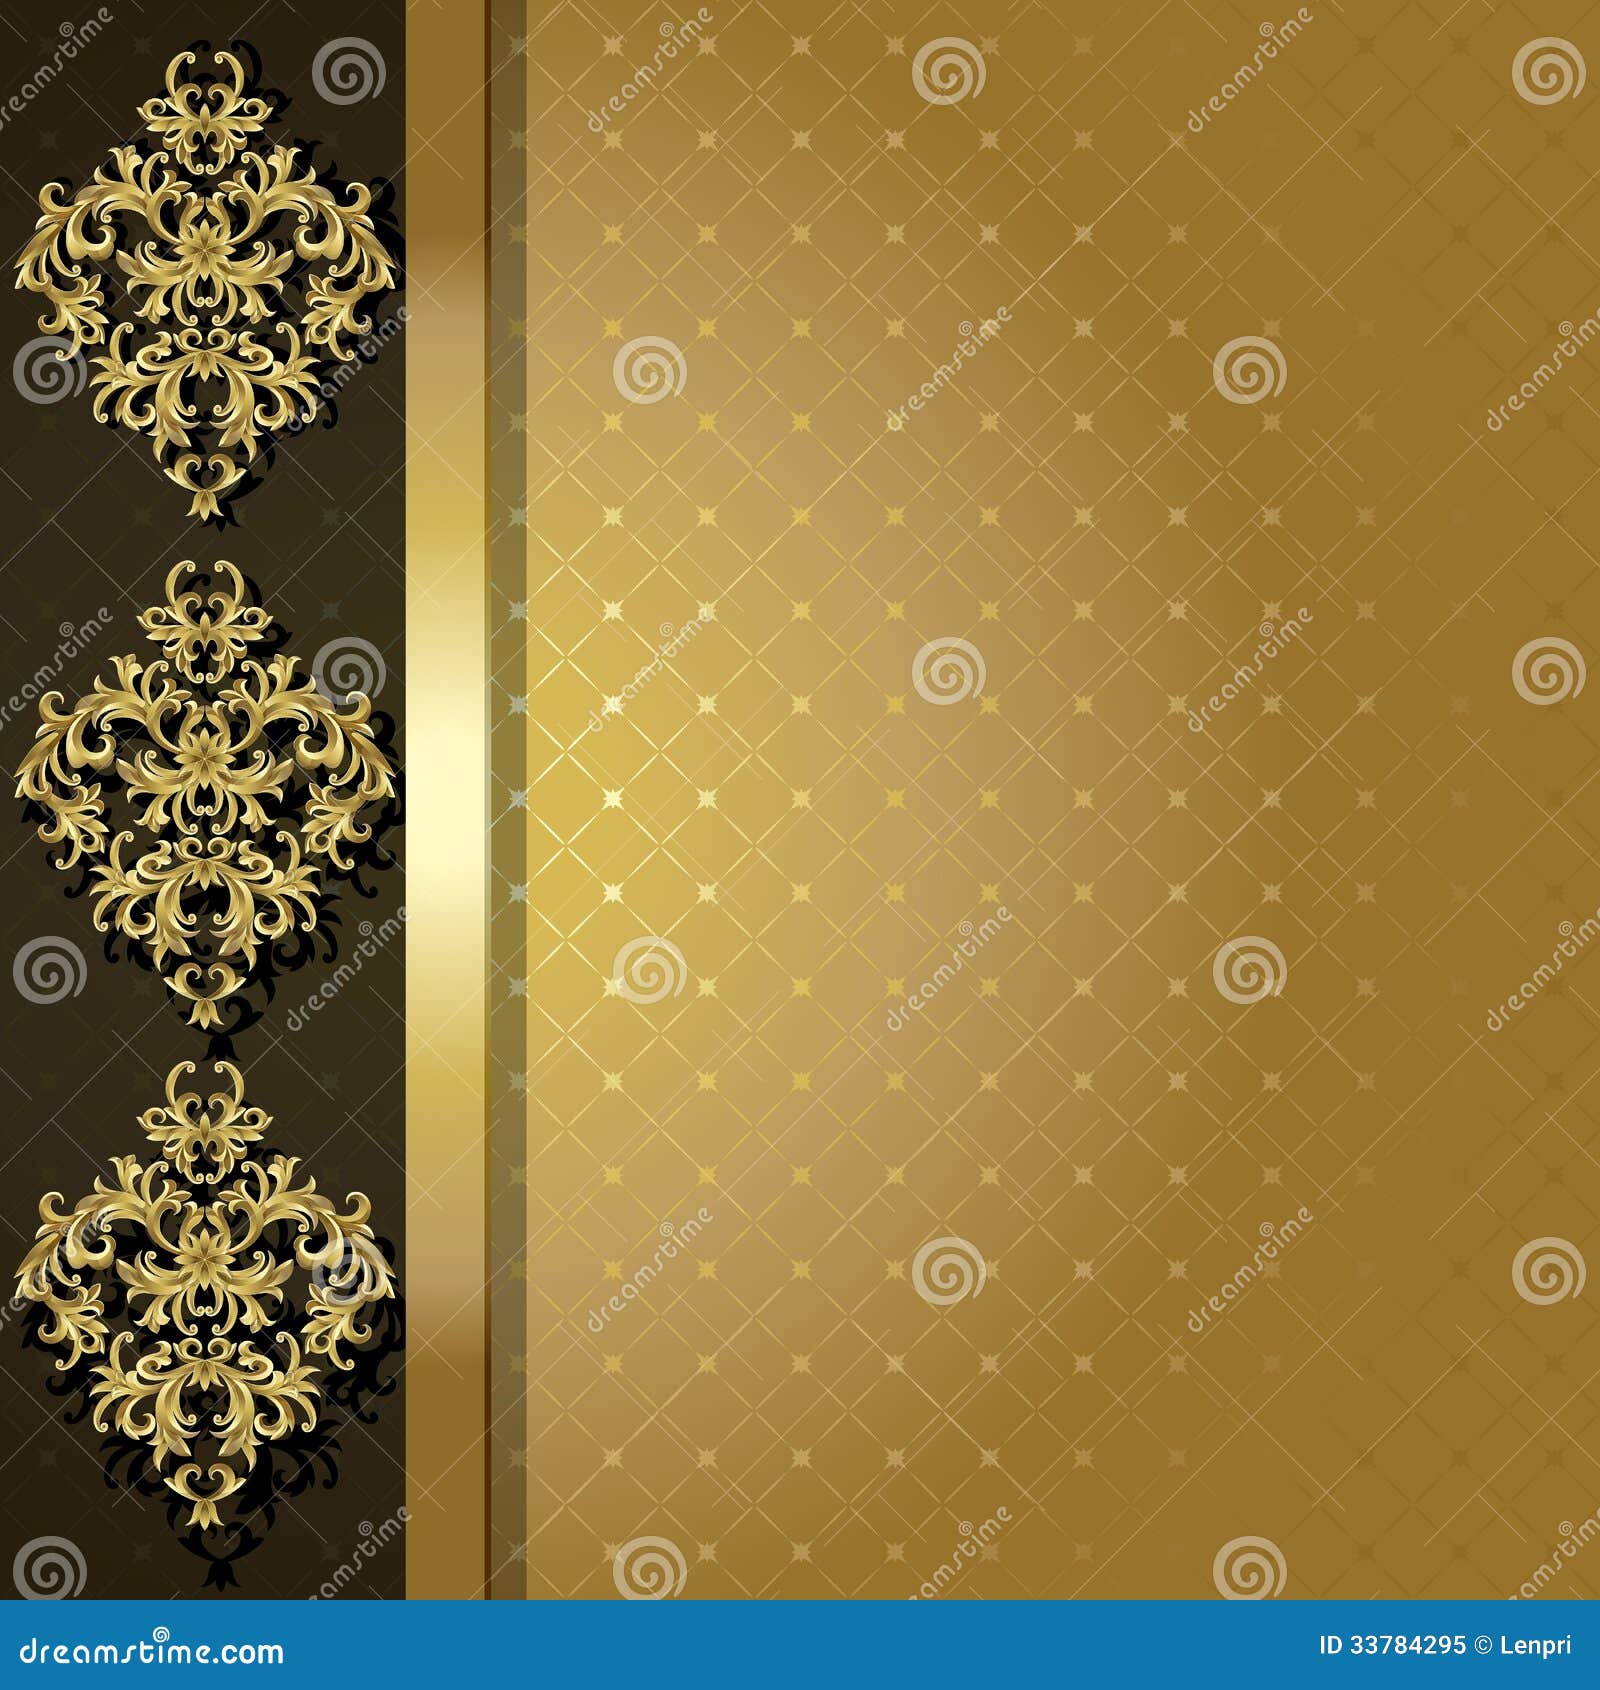 Gold background stock vector. Illustration of leaf, vector - 33784295